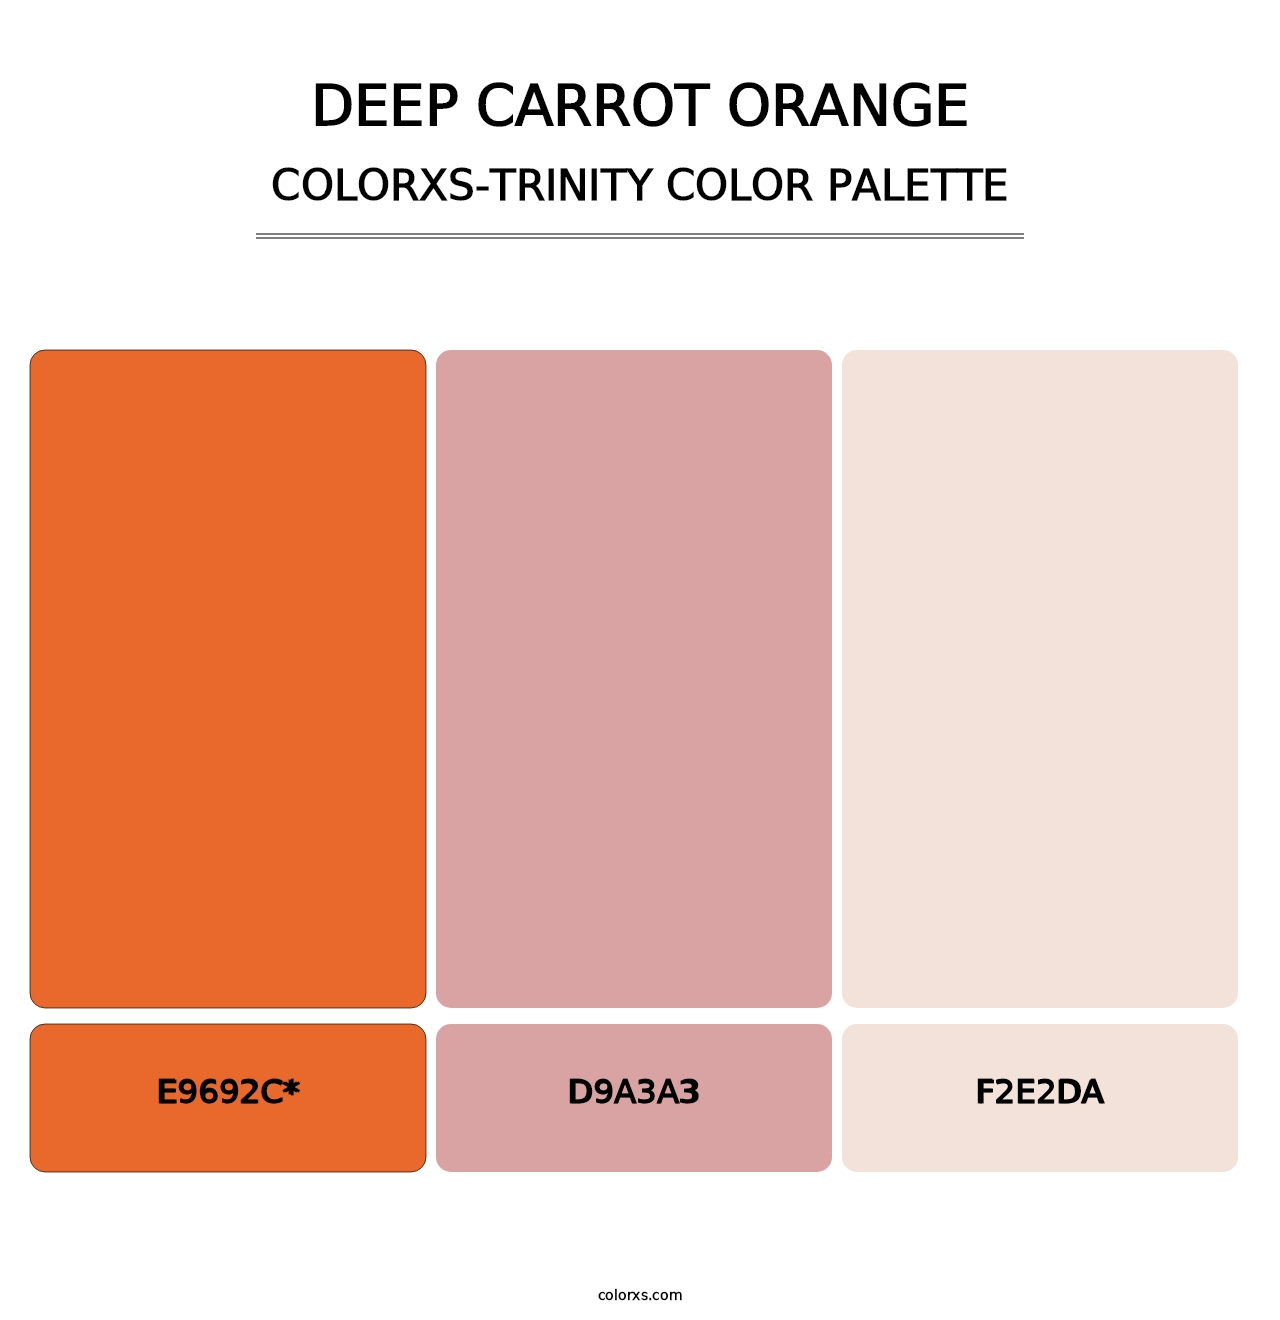 Deep Carrot Orange - Colorxs Trinity Palette